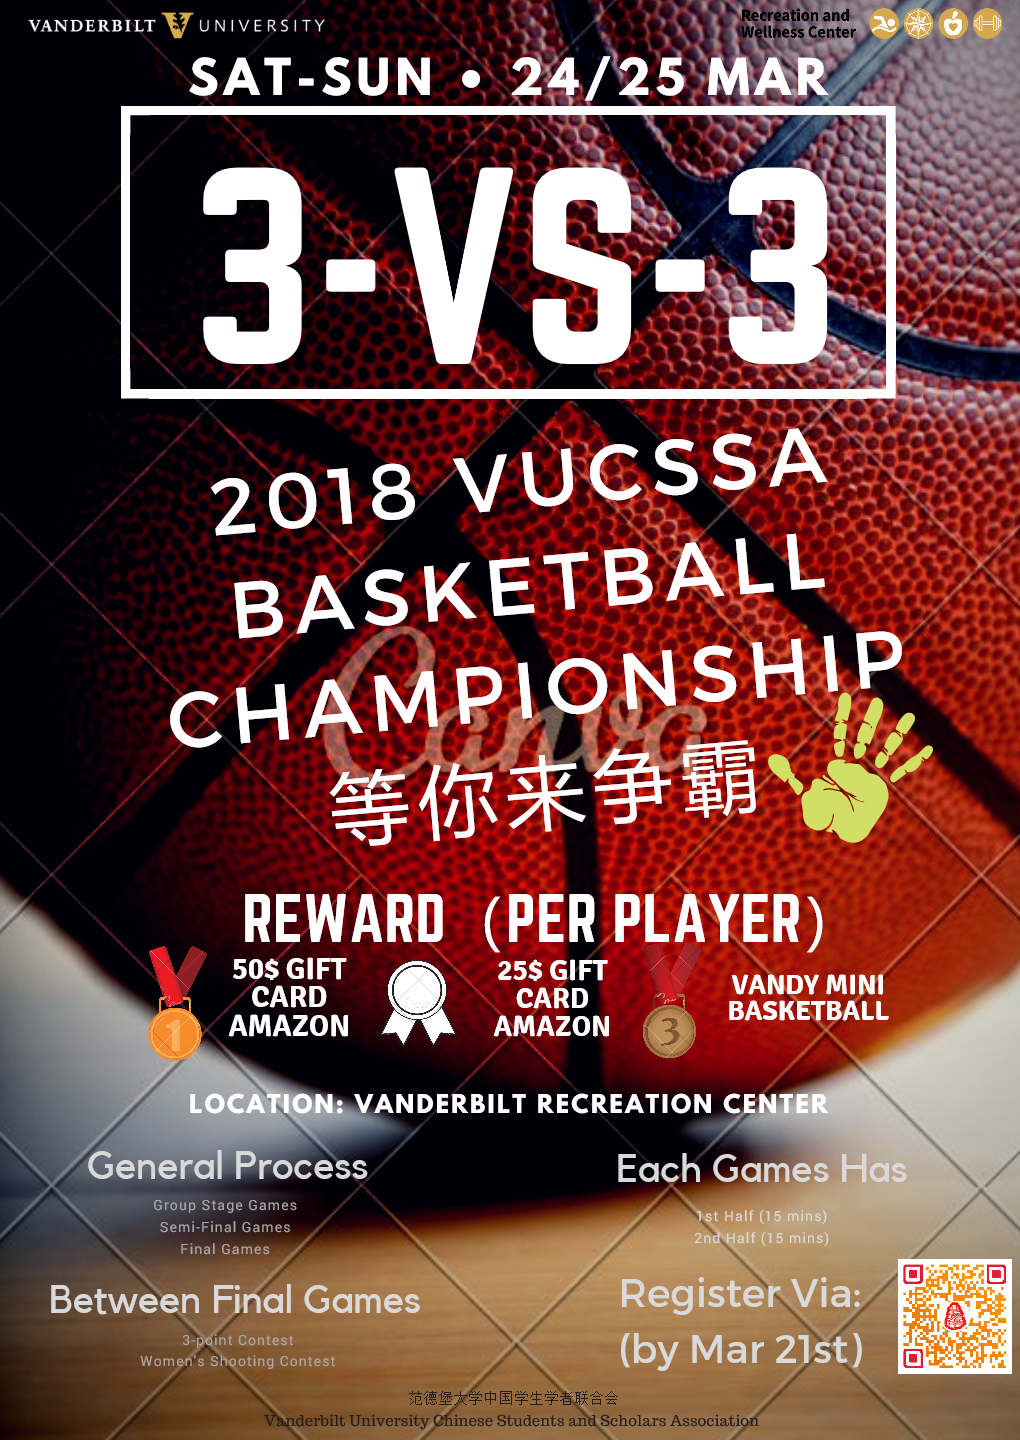 2017 VUCSSA Basketball Championship poster